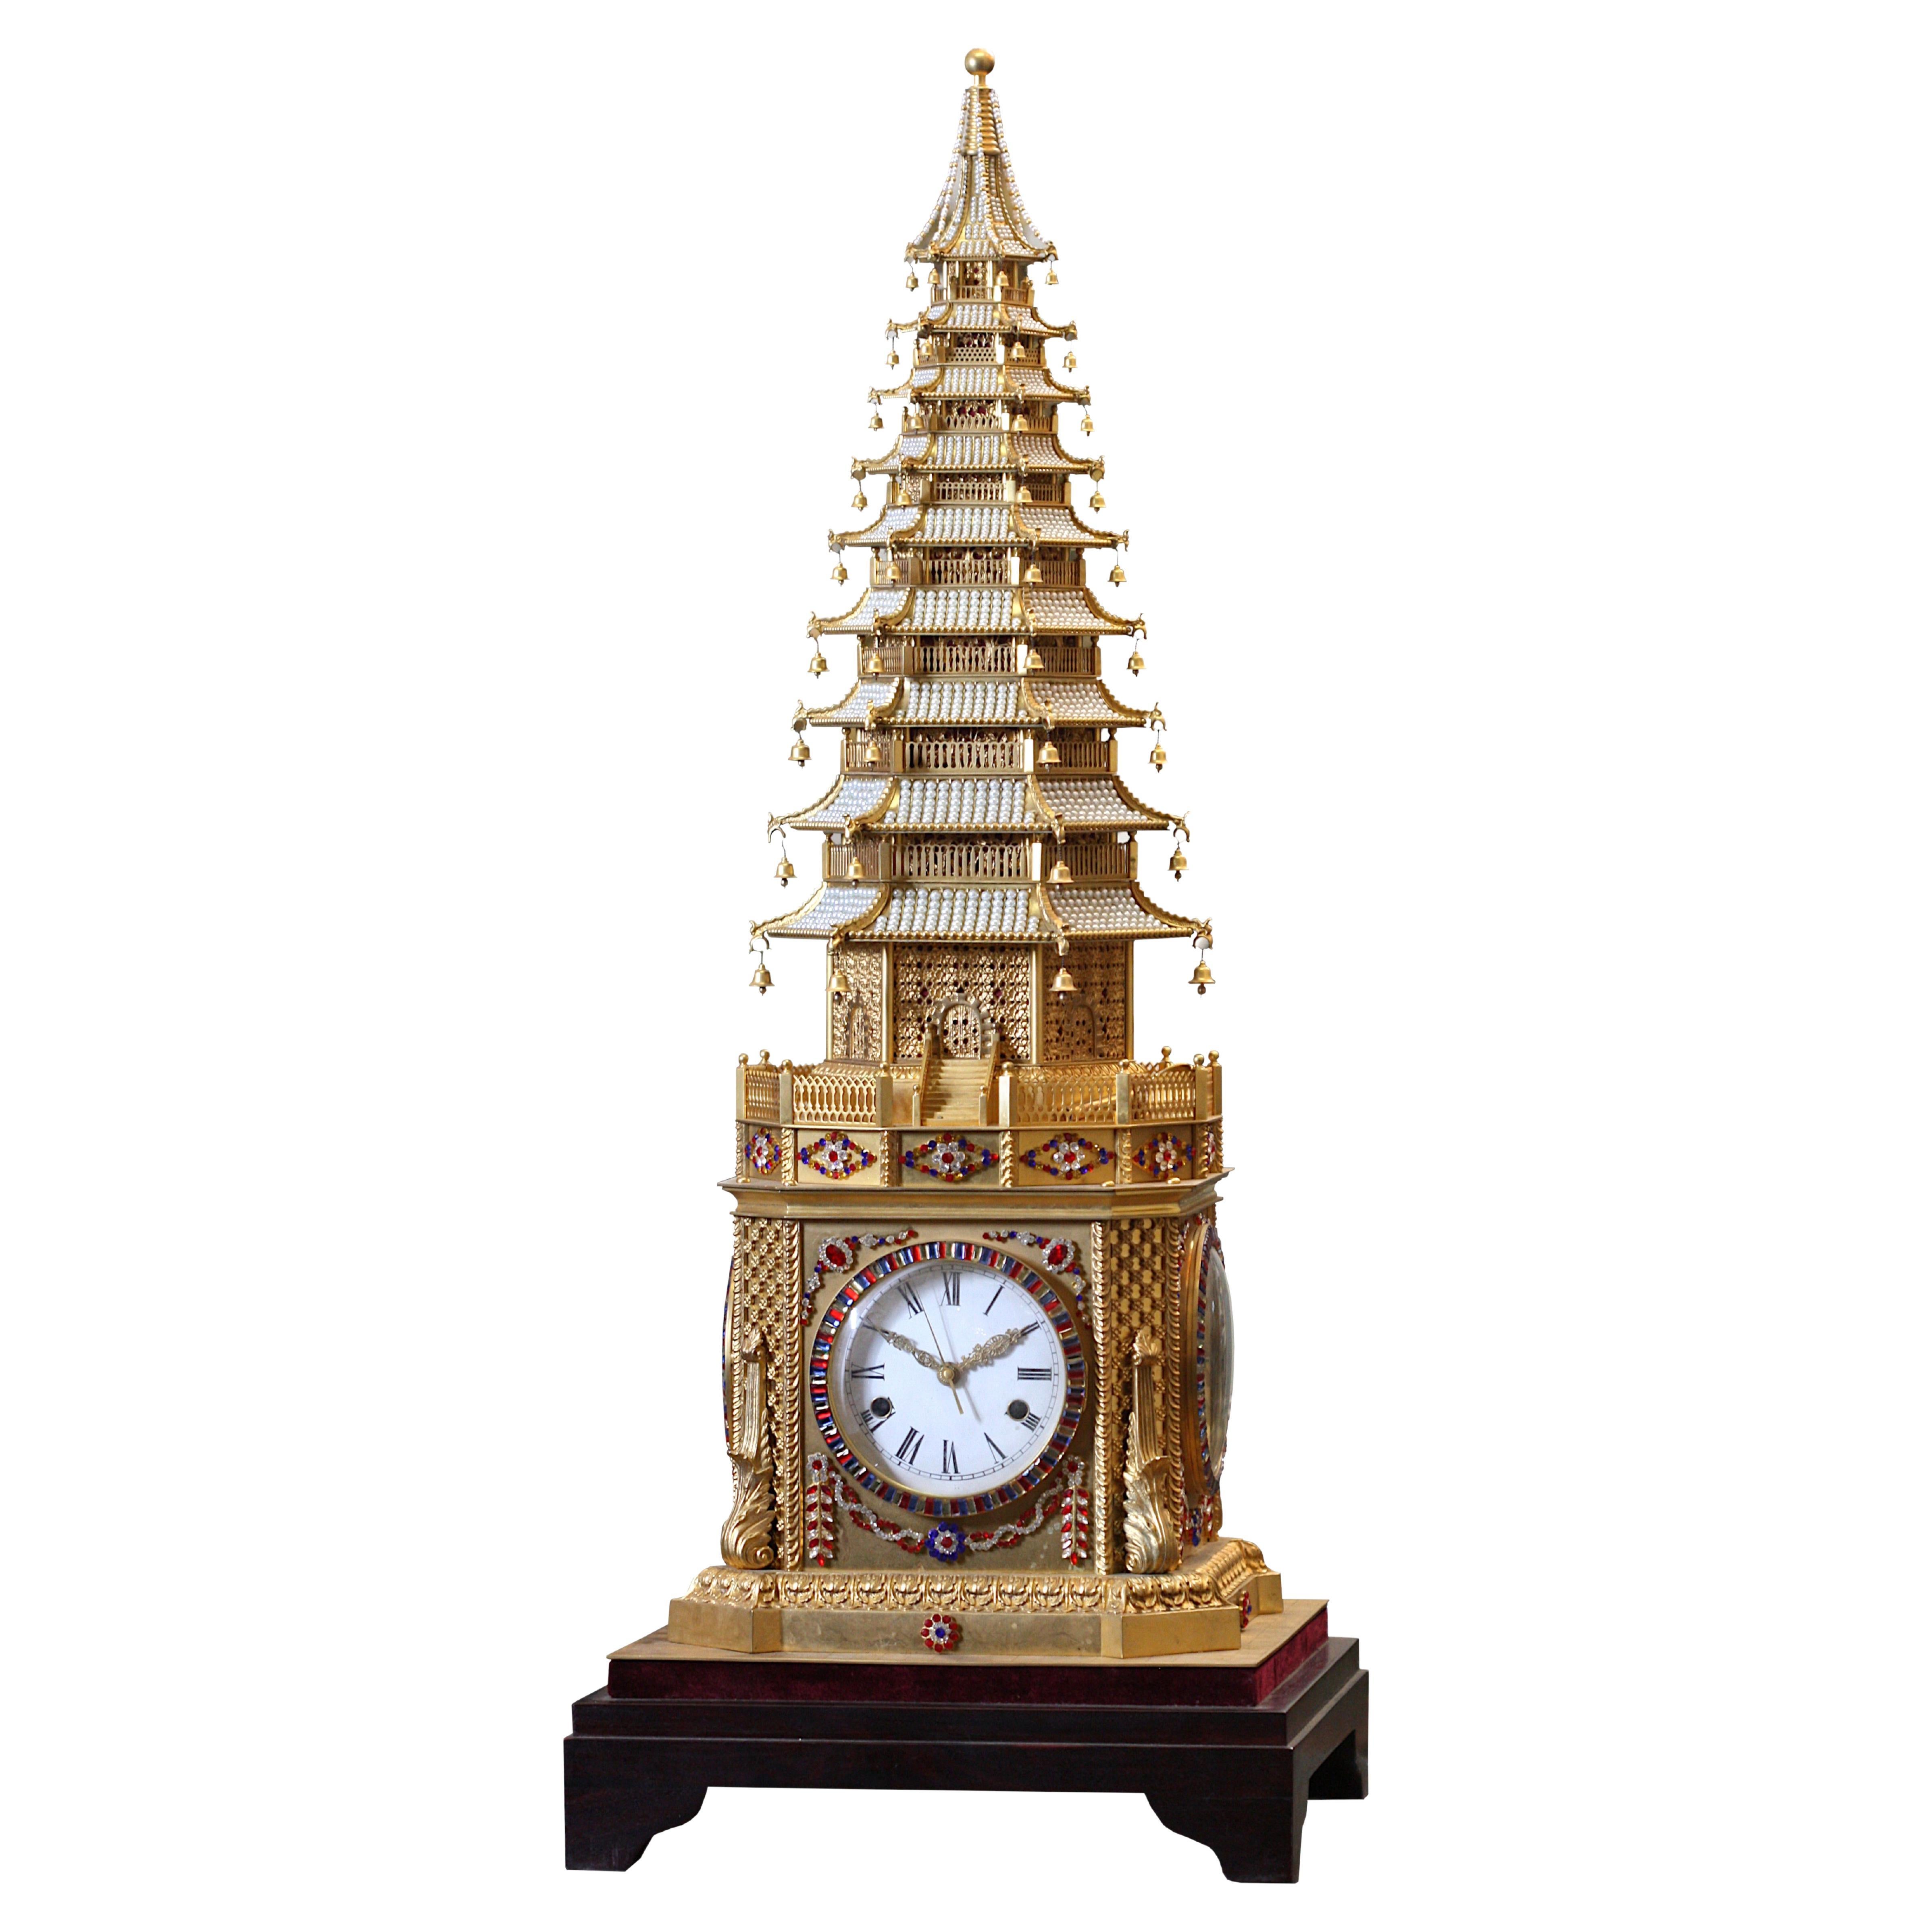 George III Style Gilt-Bronze Musical Automaton Clock